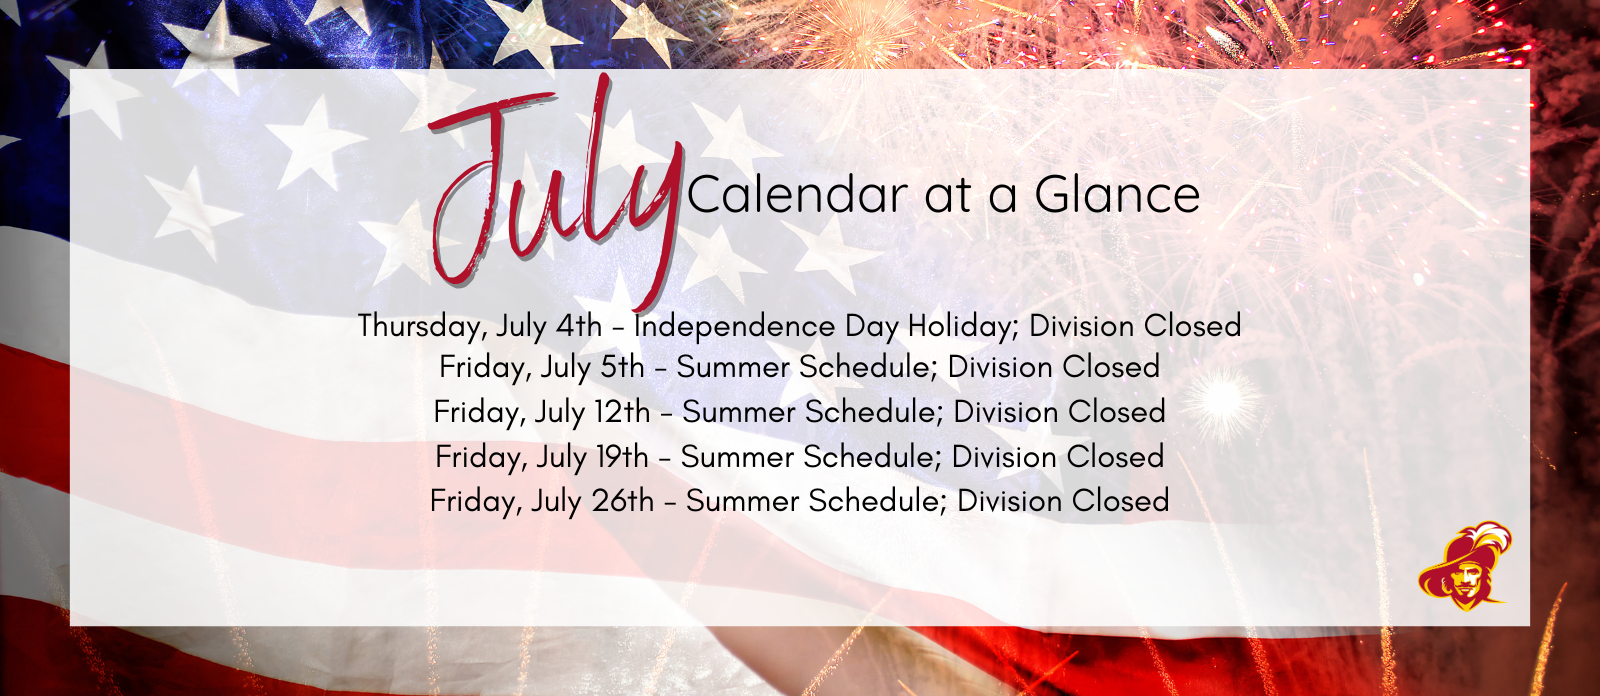 July calendar at a glance